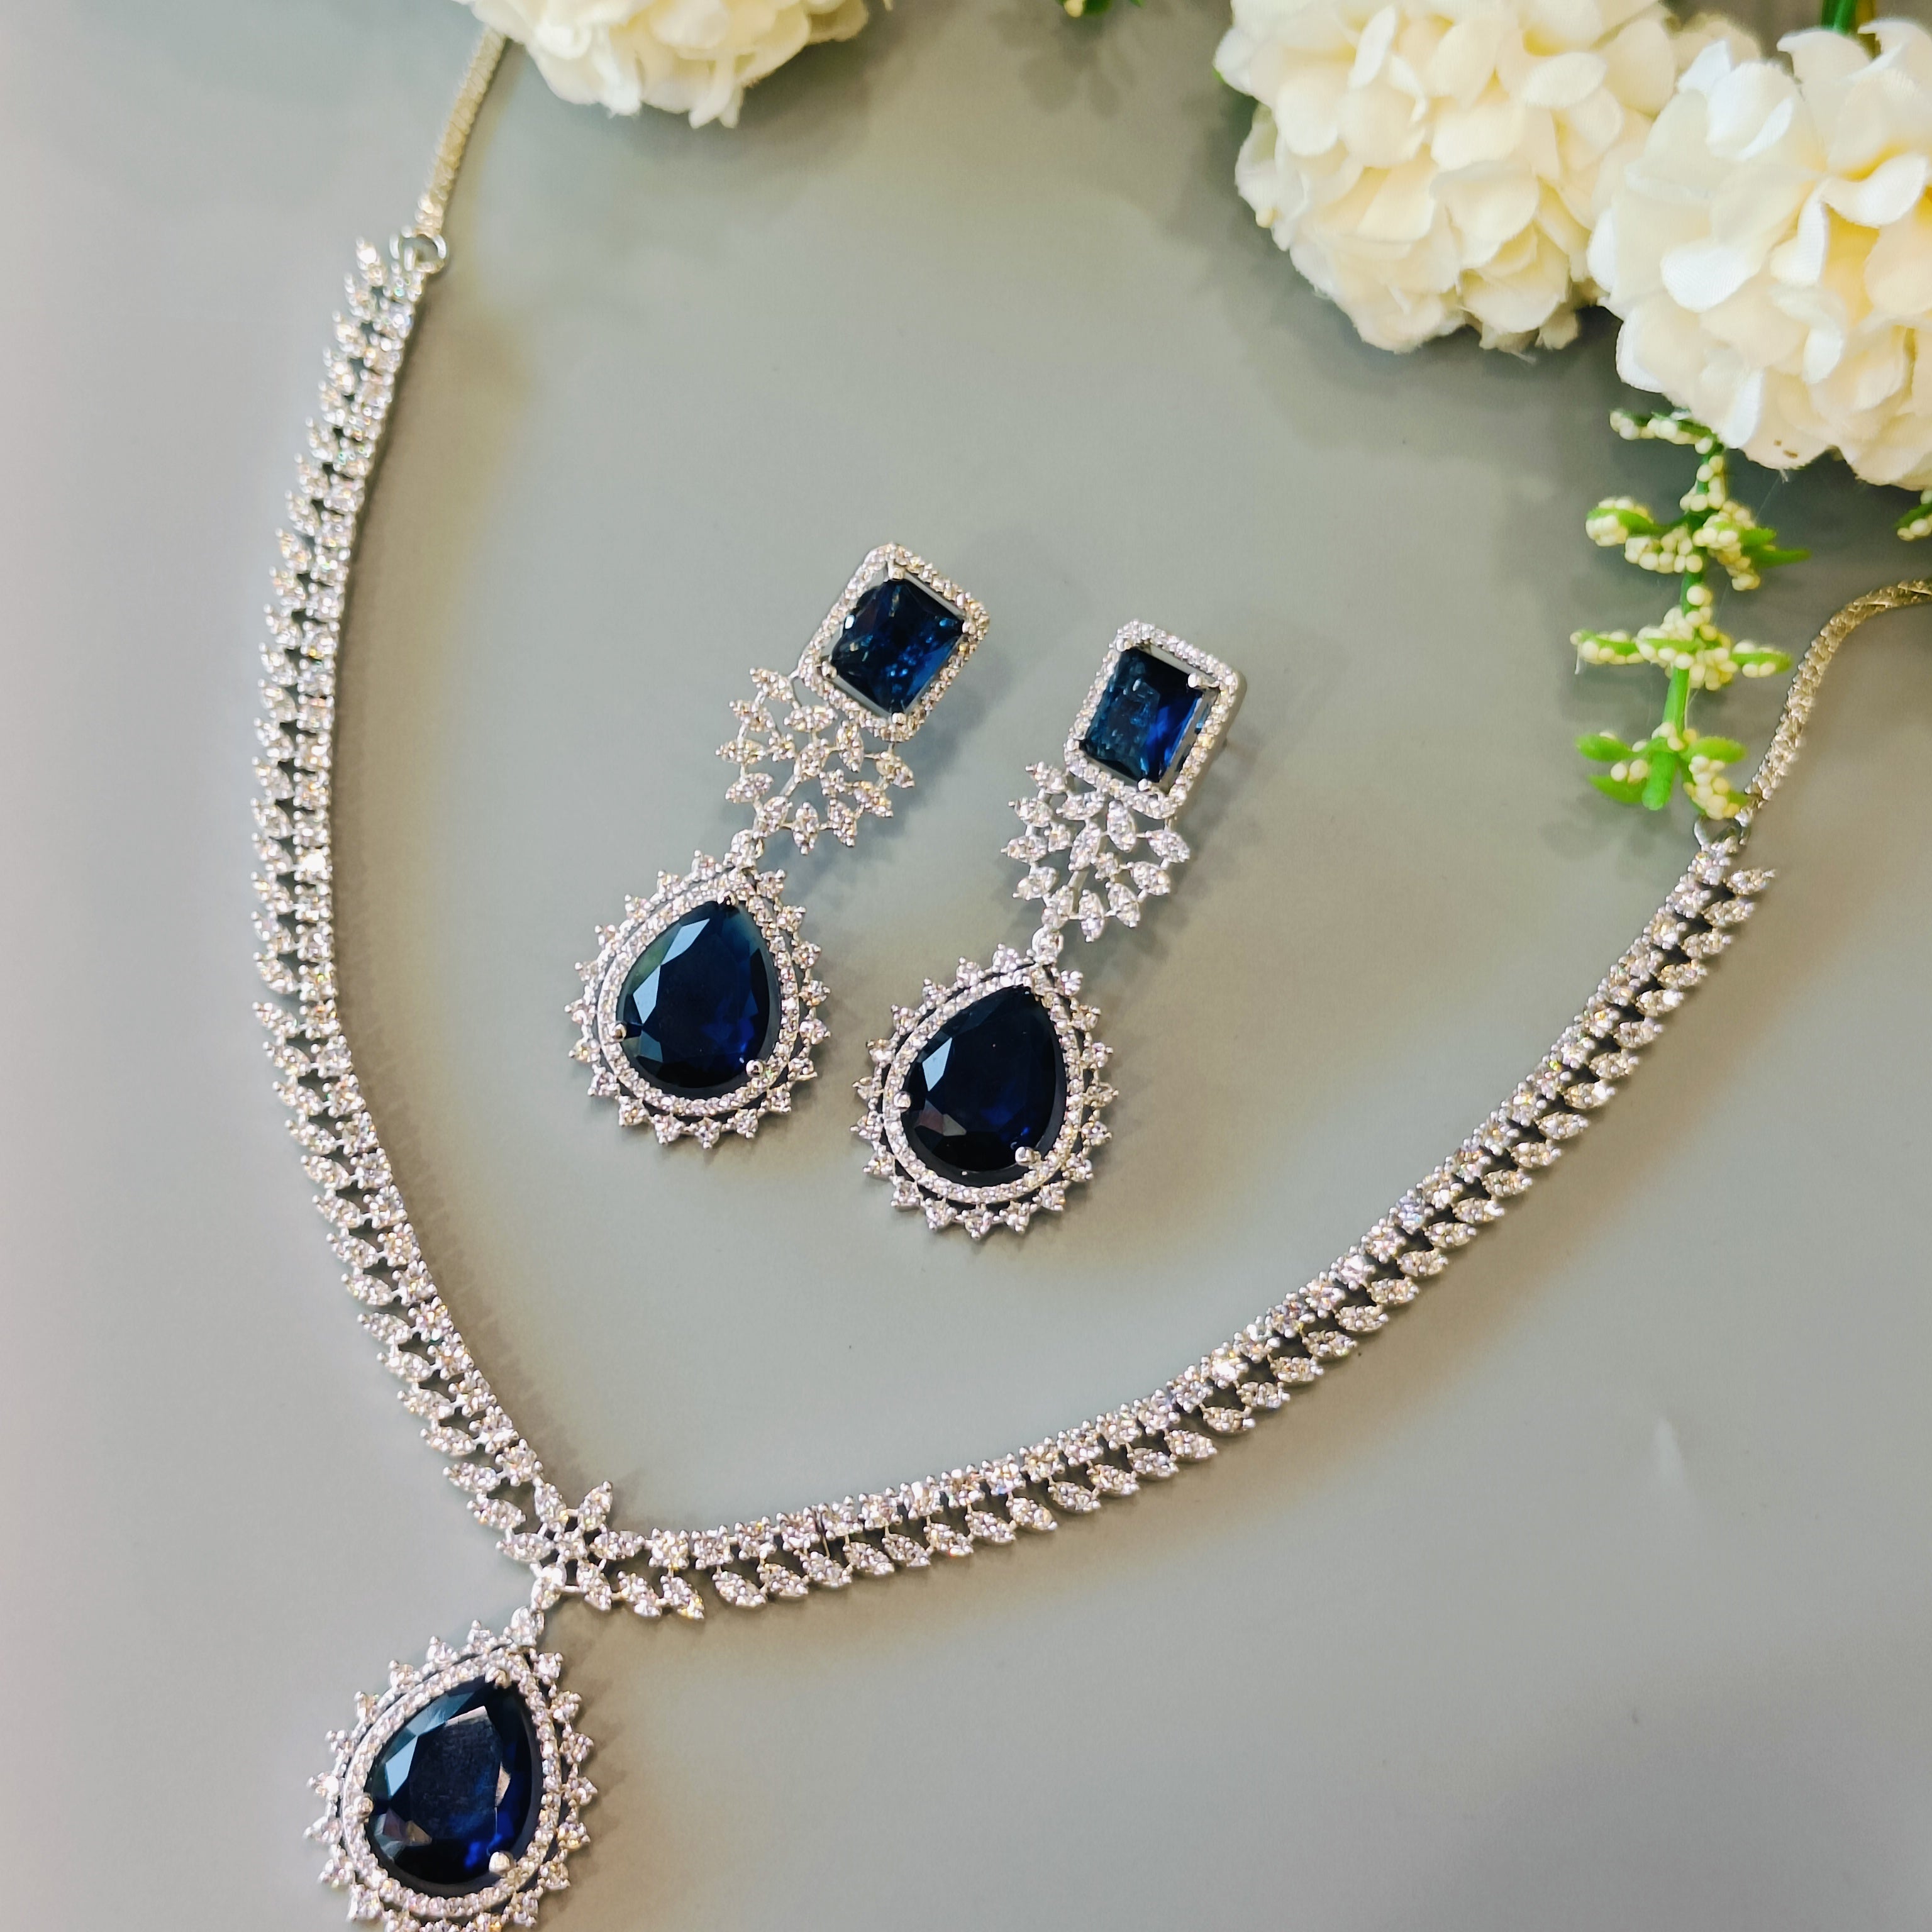 Ad Anaysha neckpiece - Blue